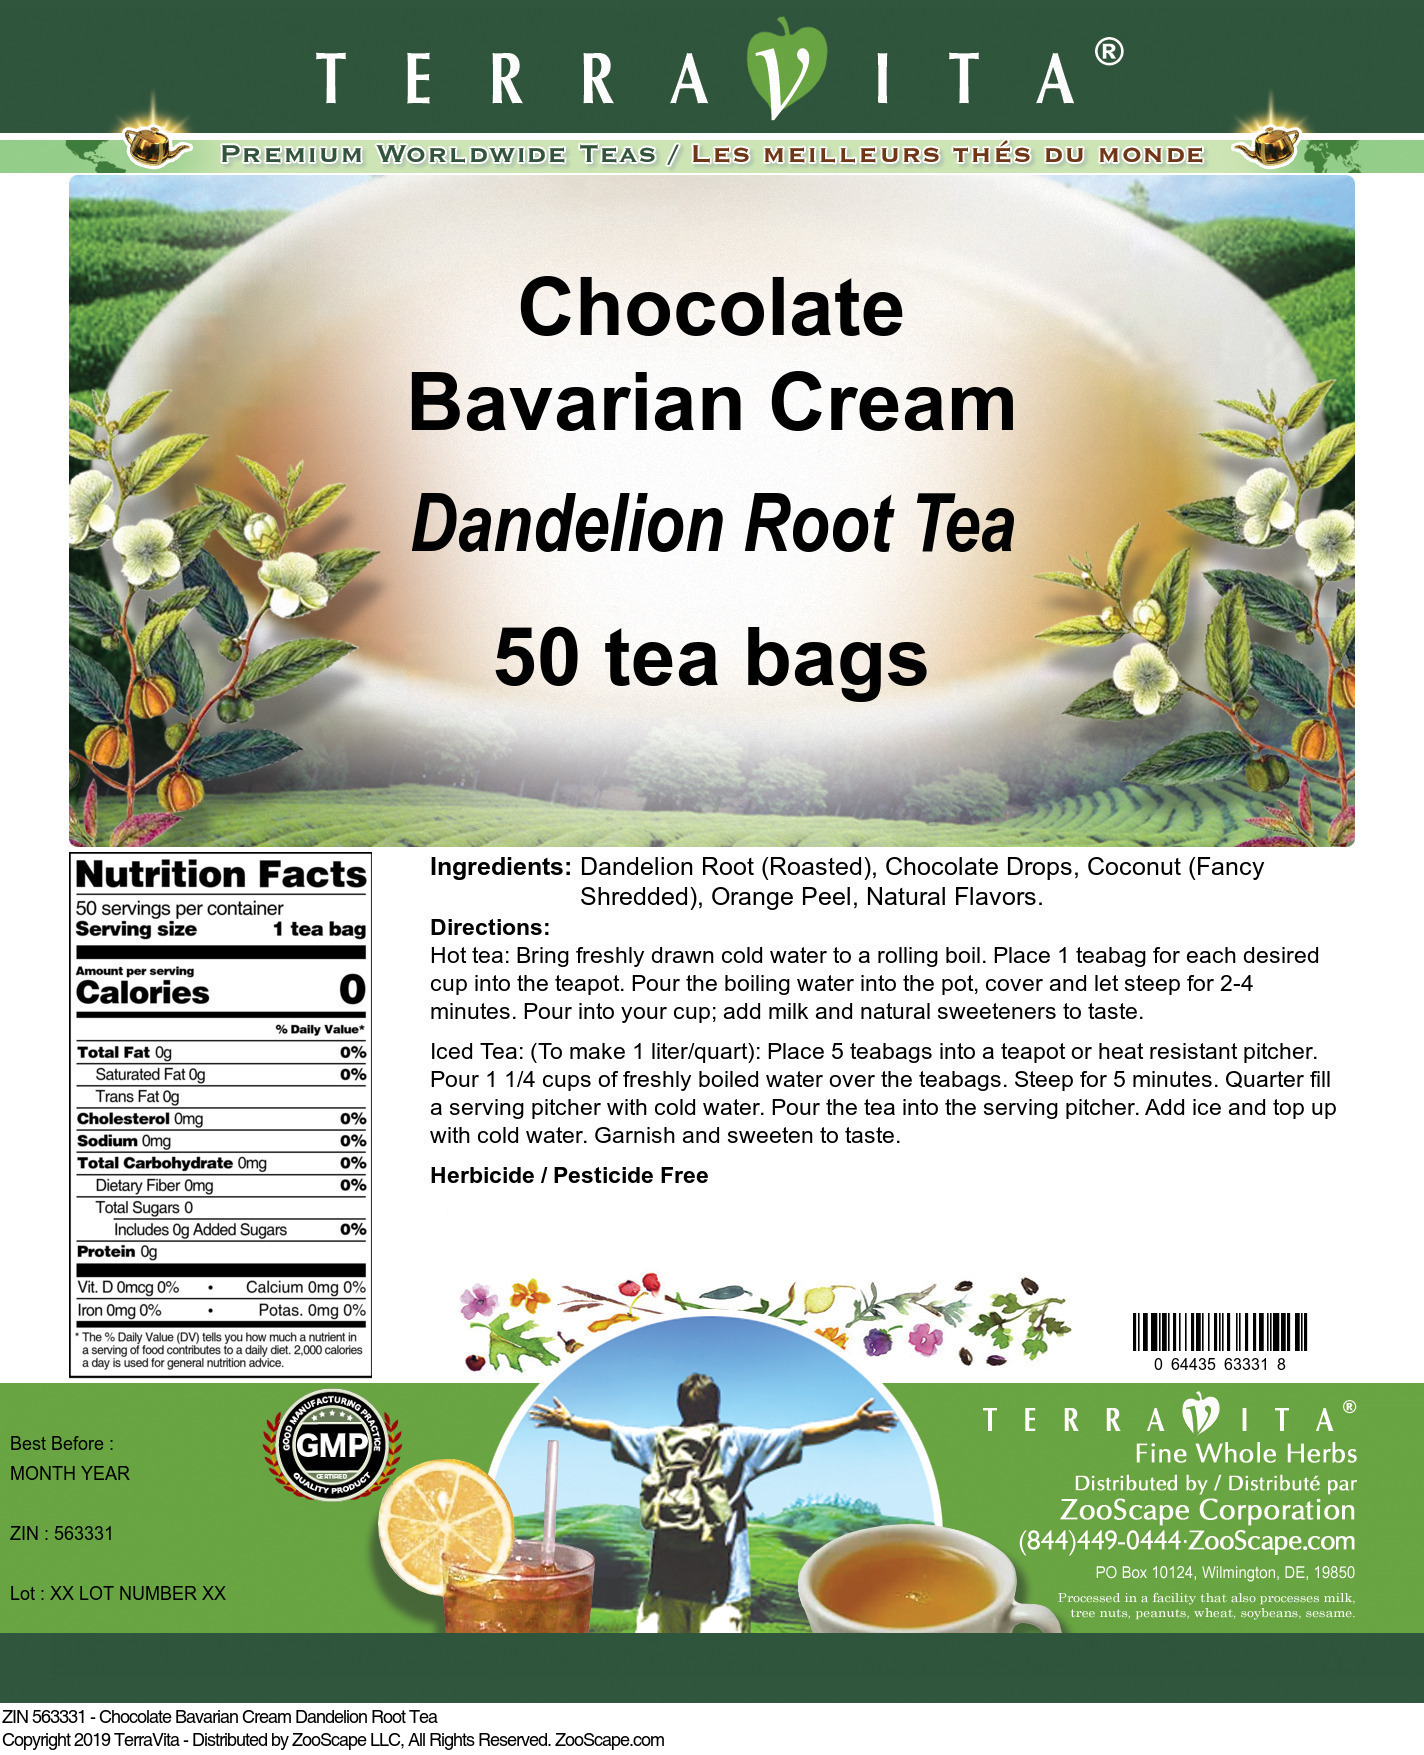 Chocolate Bavarian Cream Dandelion Root Tea - Label